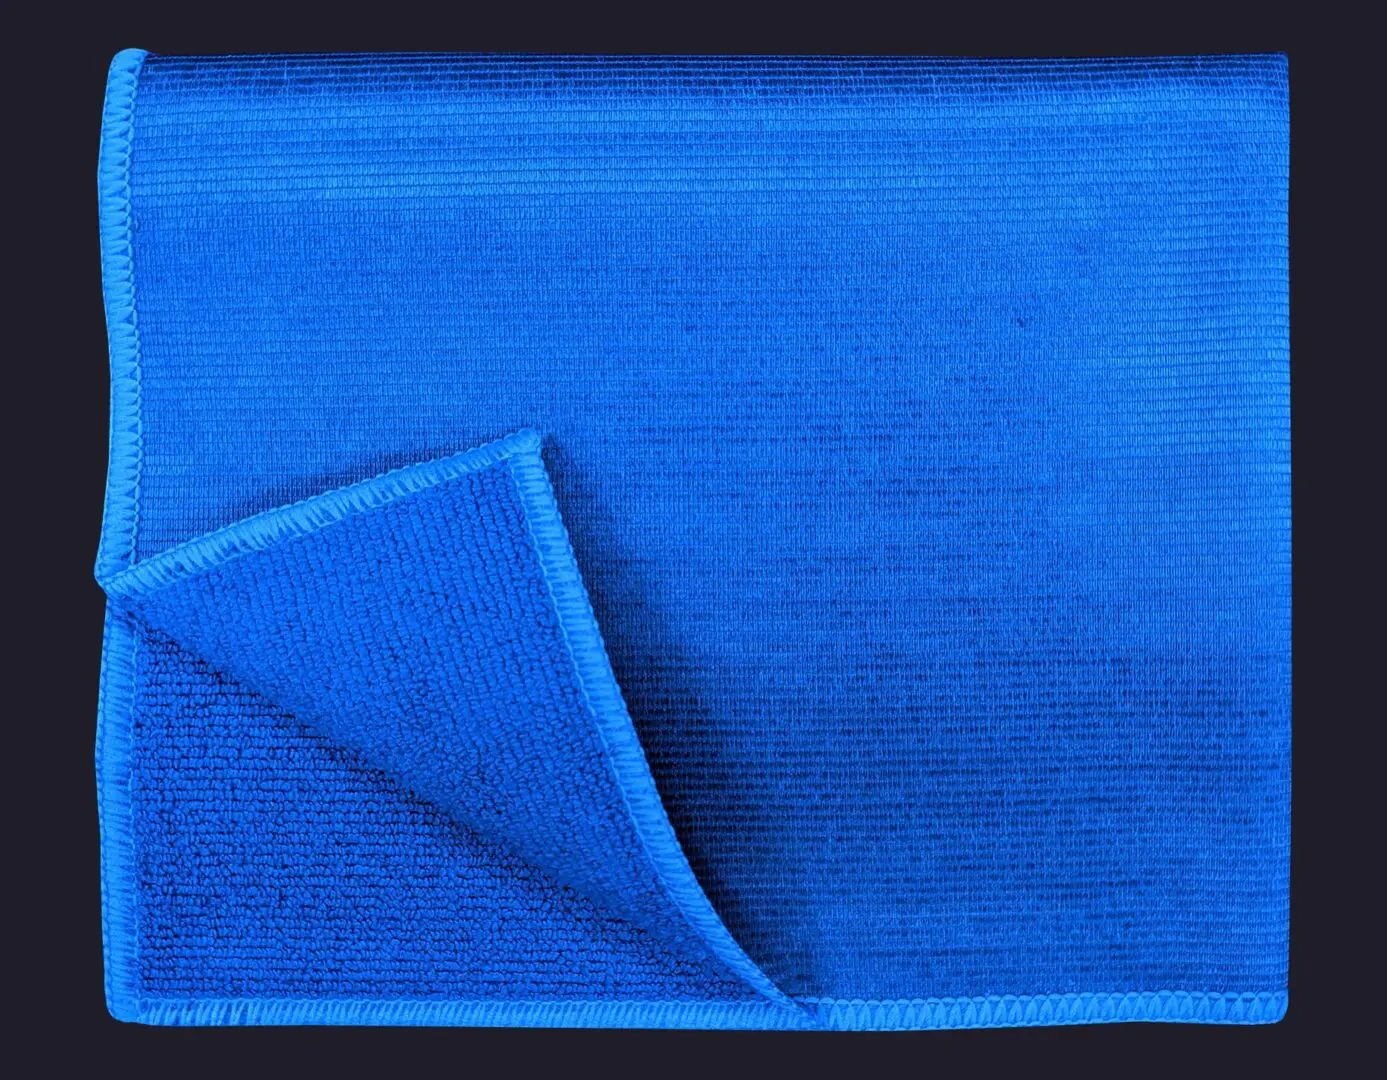 Blue color cloth folded on navy blue background